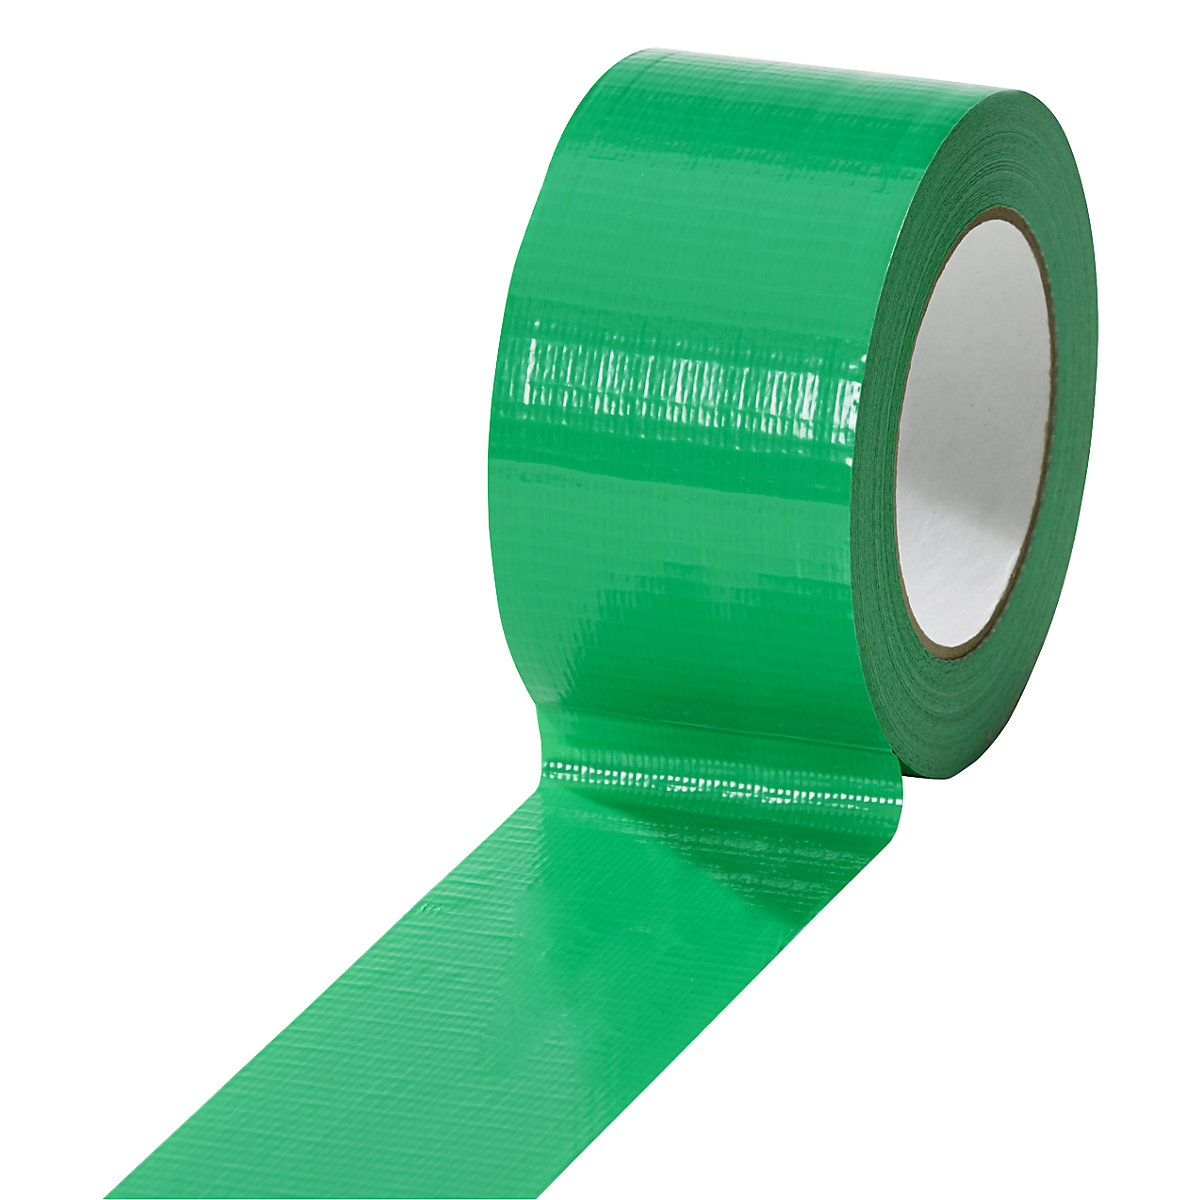 Textielband, in verschillende kleuren, VE = 18 rollen, groen, bandbreedte 50 mm-10